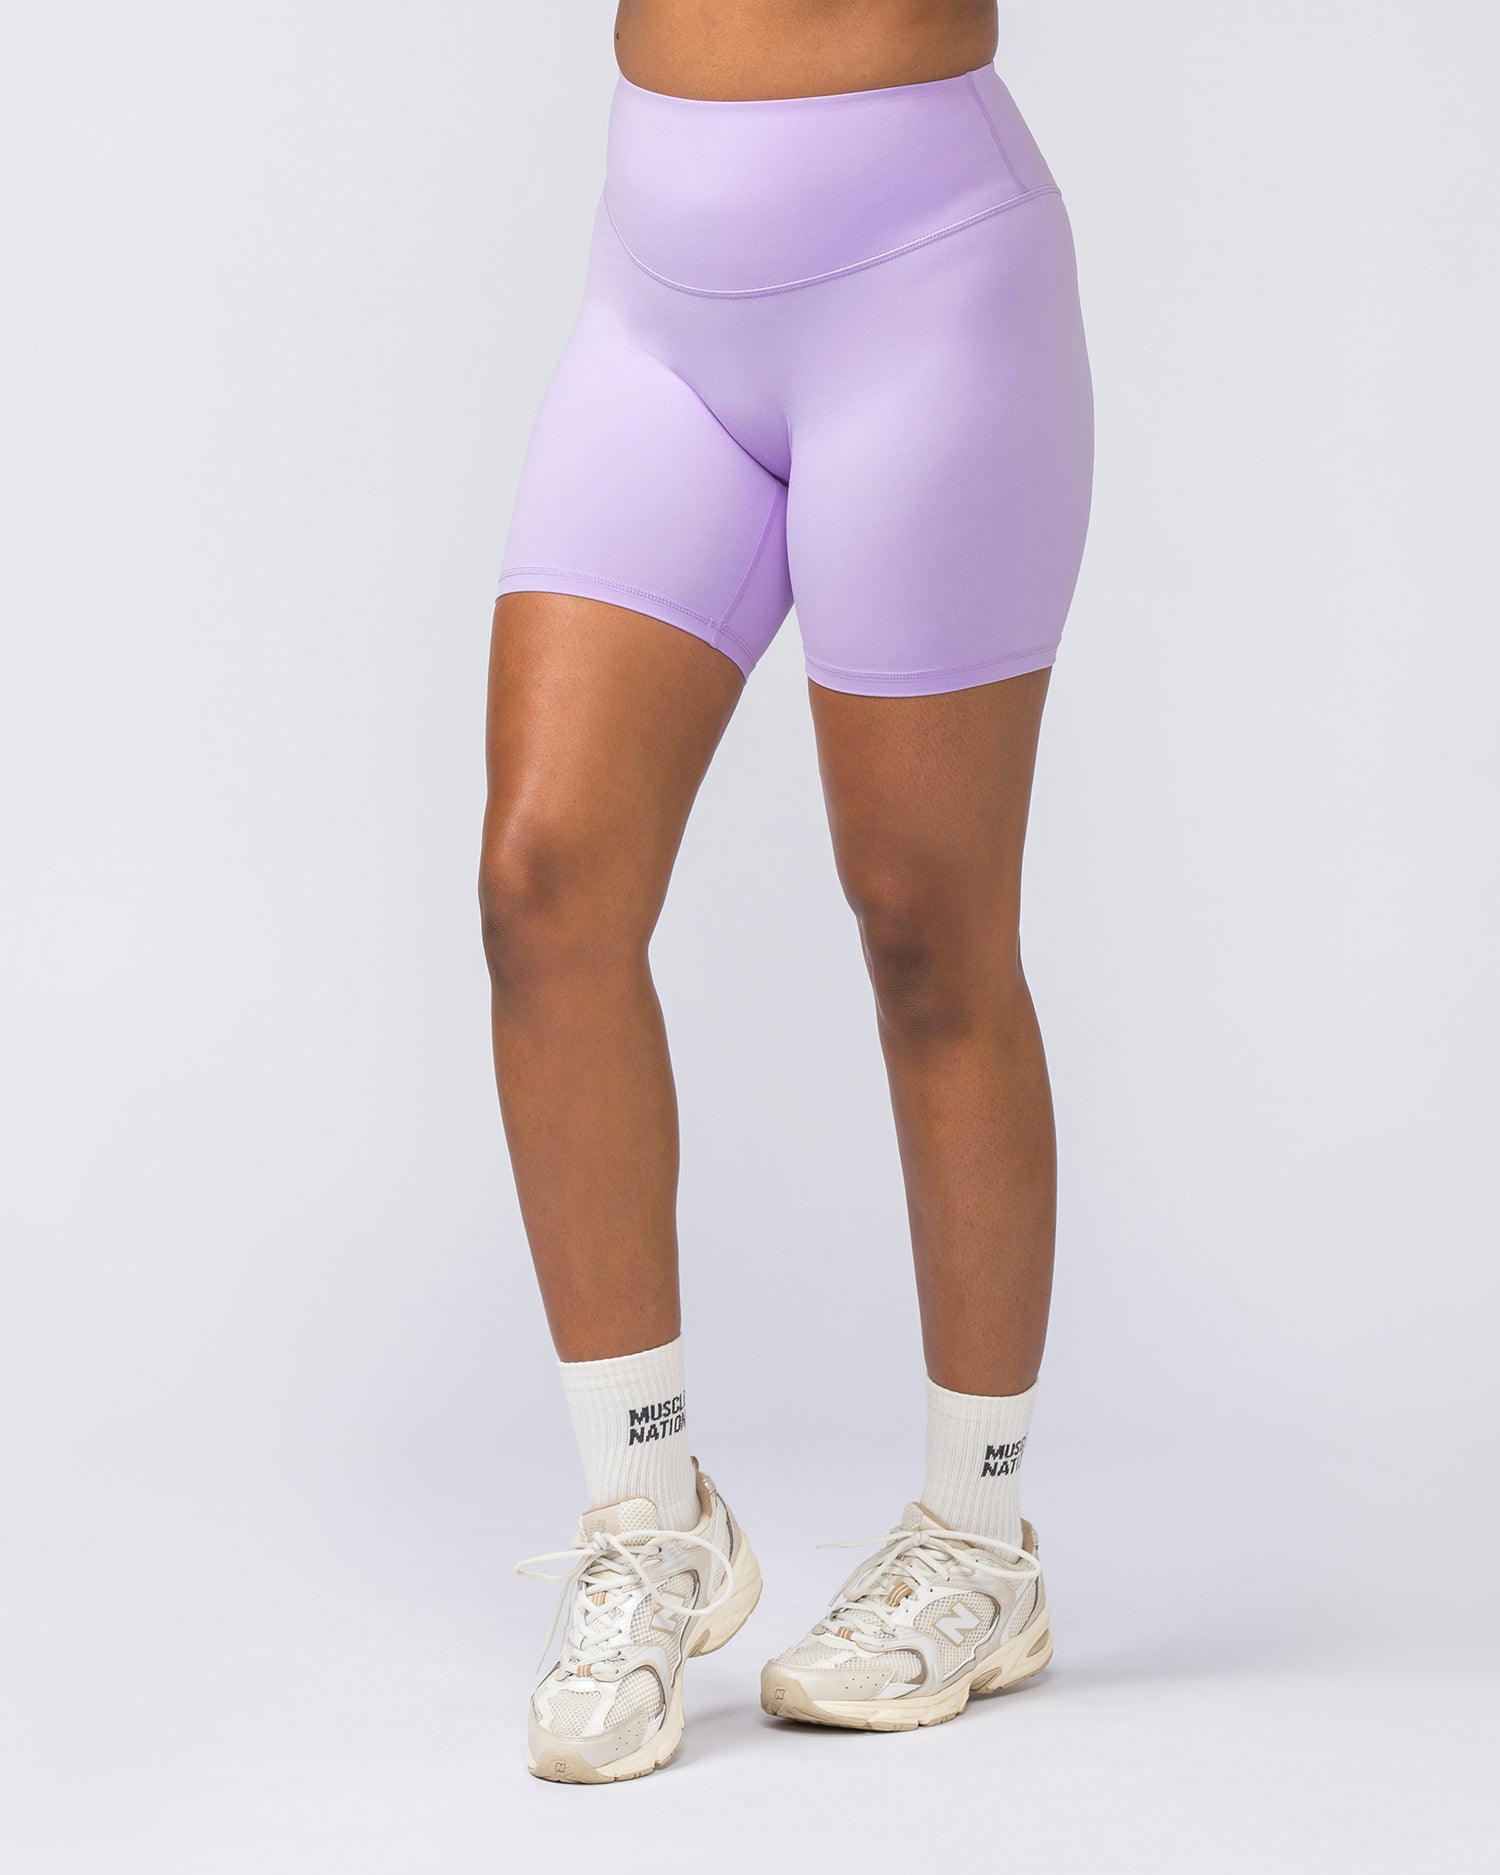 Aurora Biker Shorts – The Happiest Fitness Co